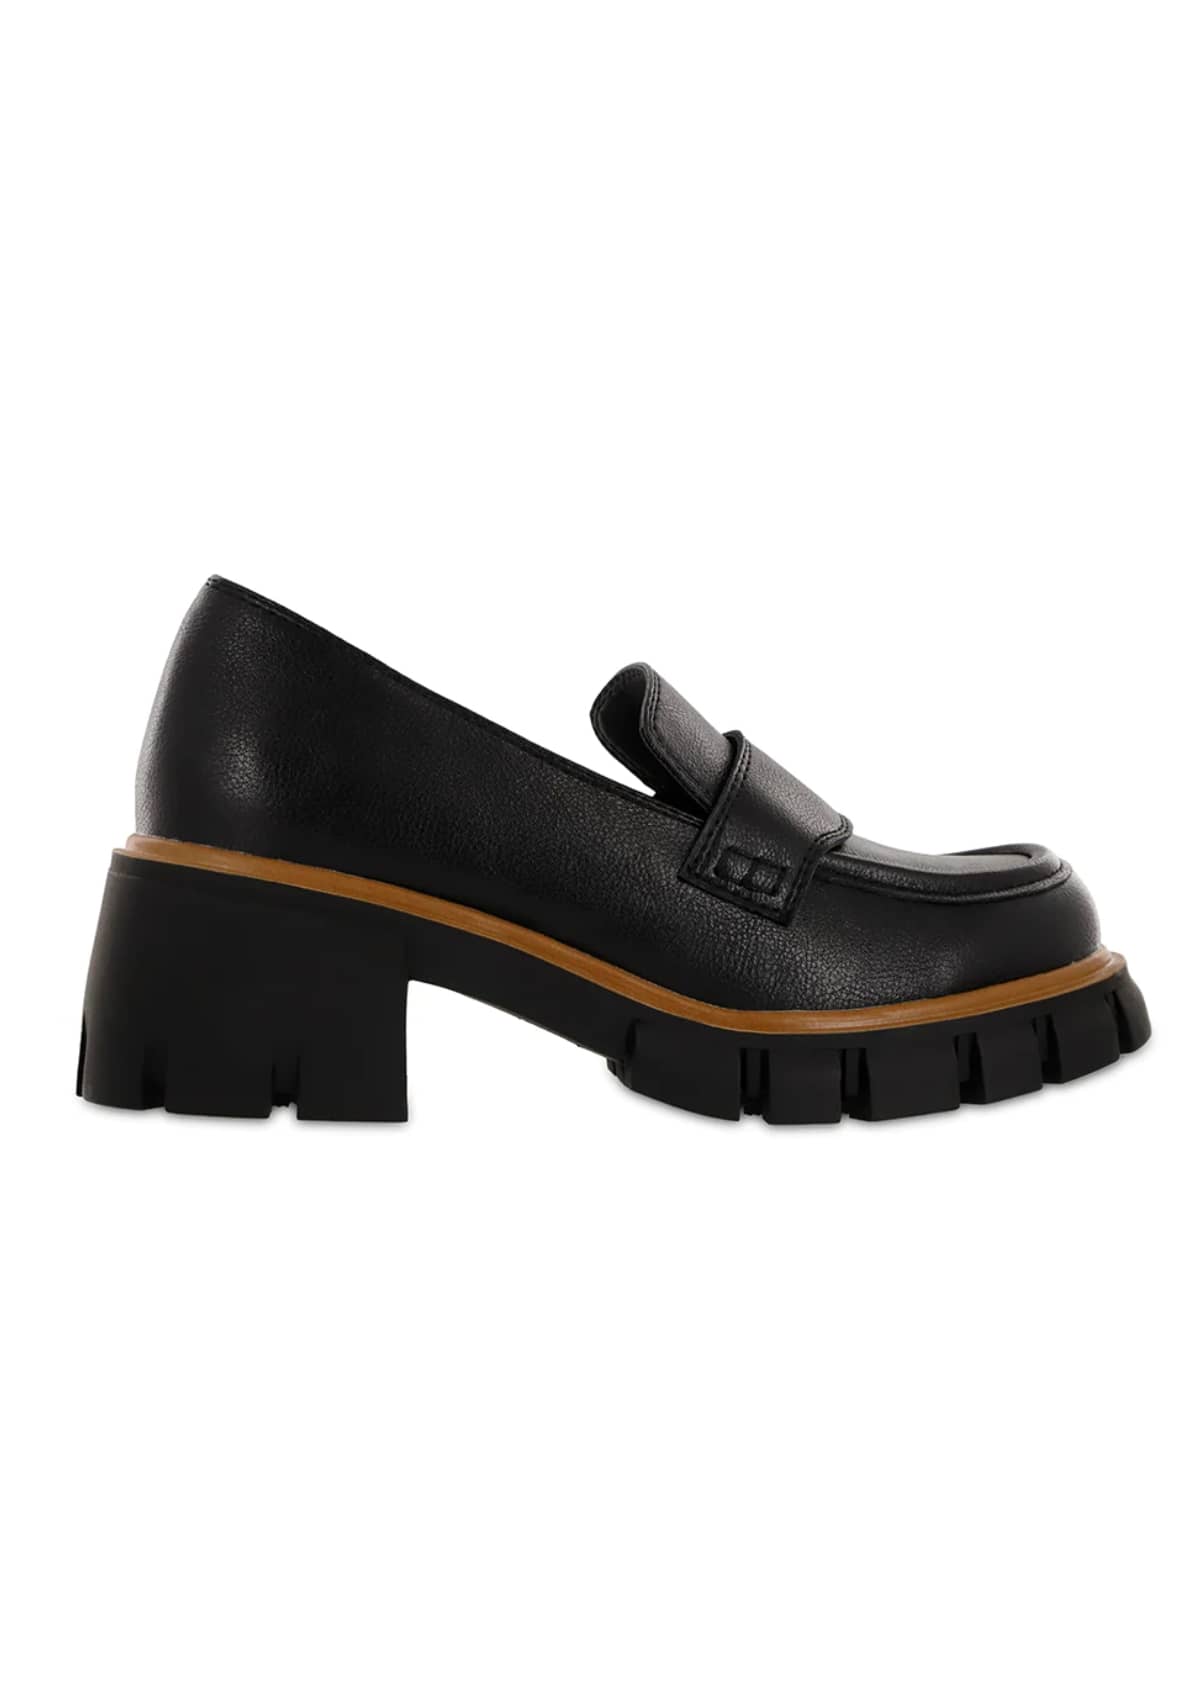 "Robbin" Platform Loafers -Mia Shoes- Ruby Jane-